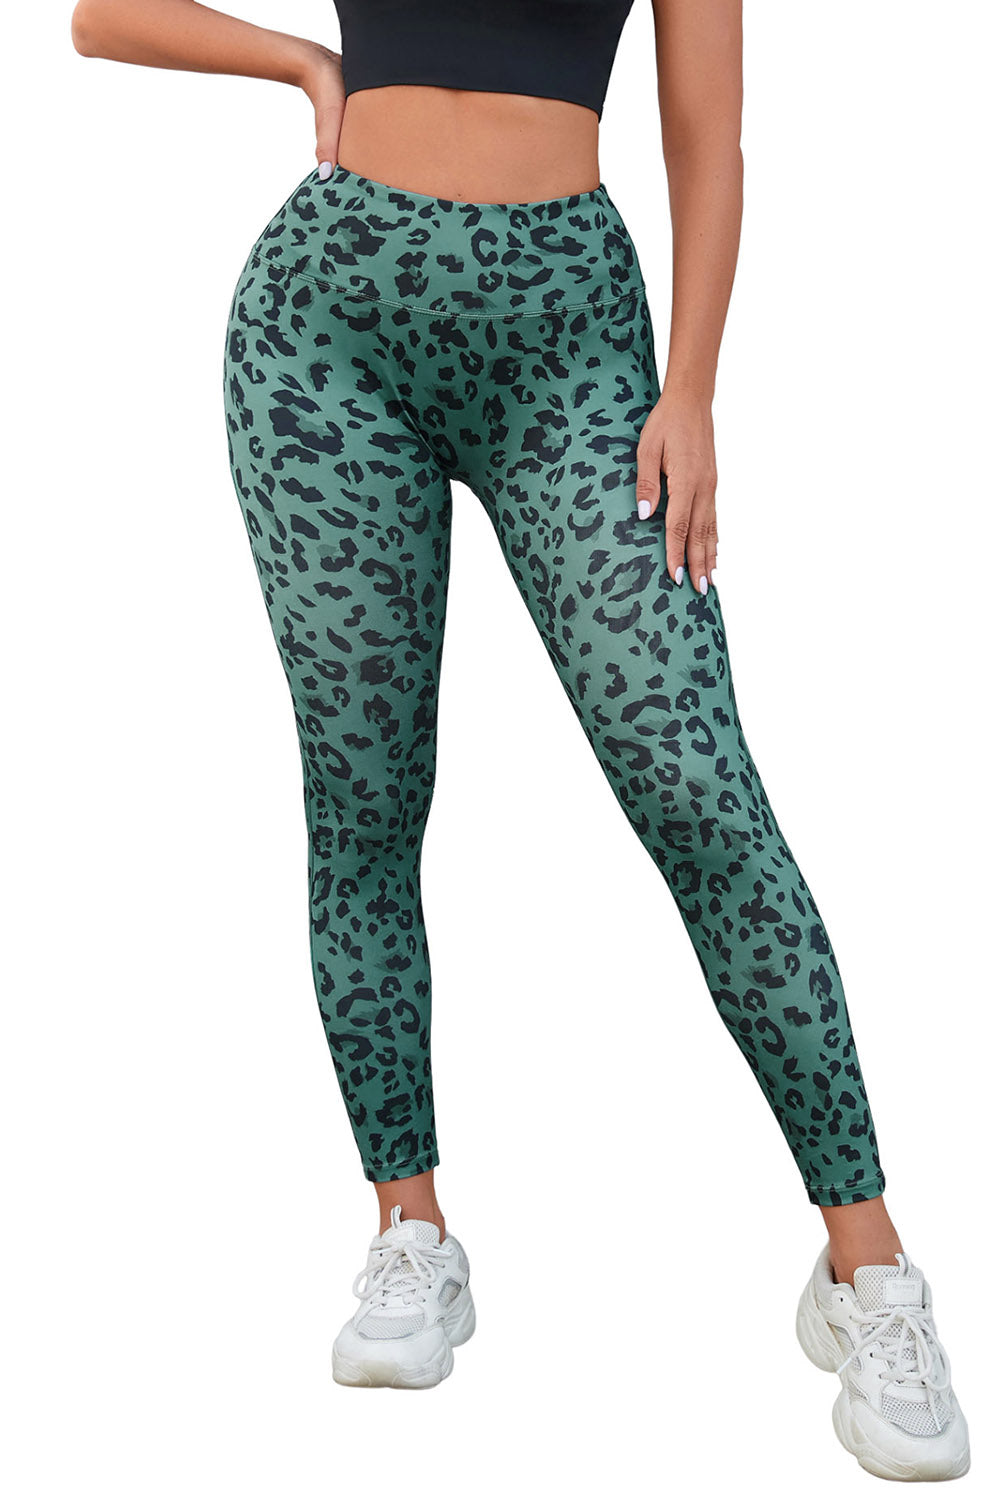 Classic Leopard Green Print Active Leggings